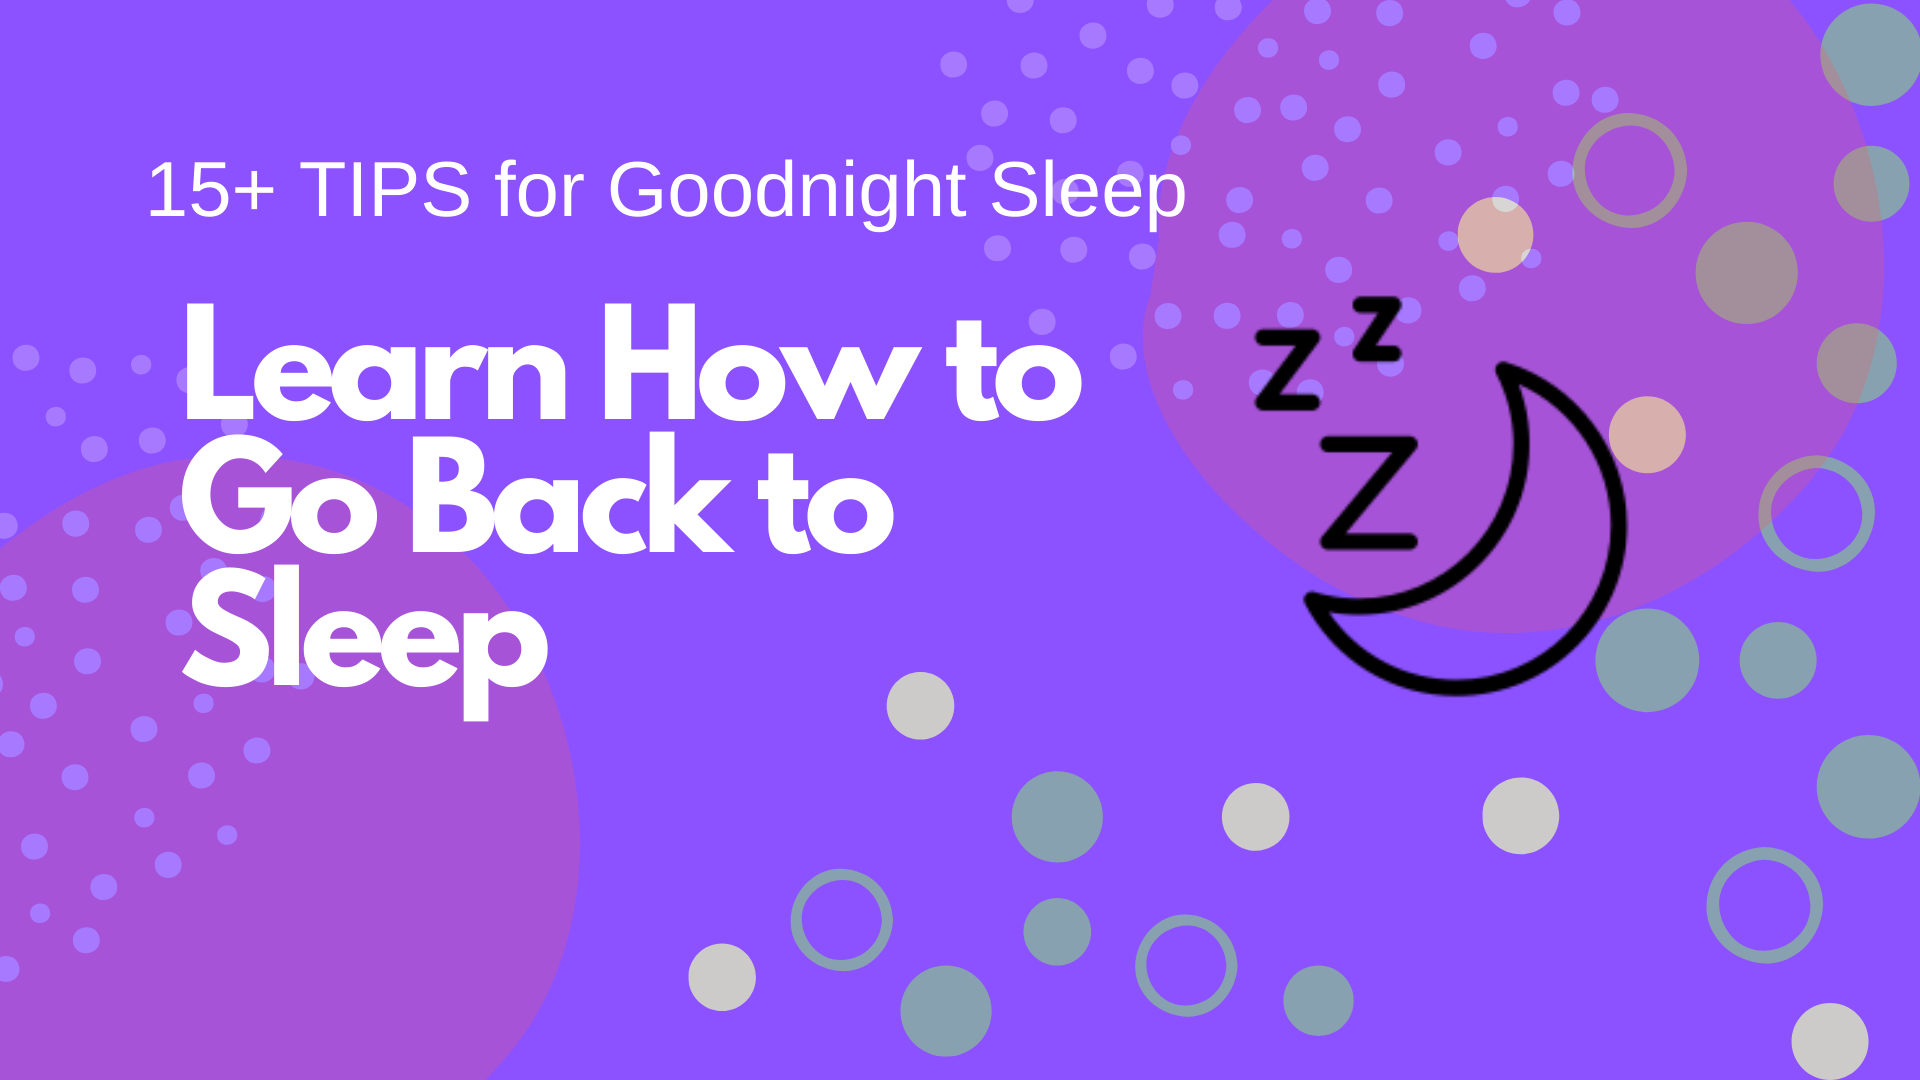 Learn how to go back to sleep